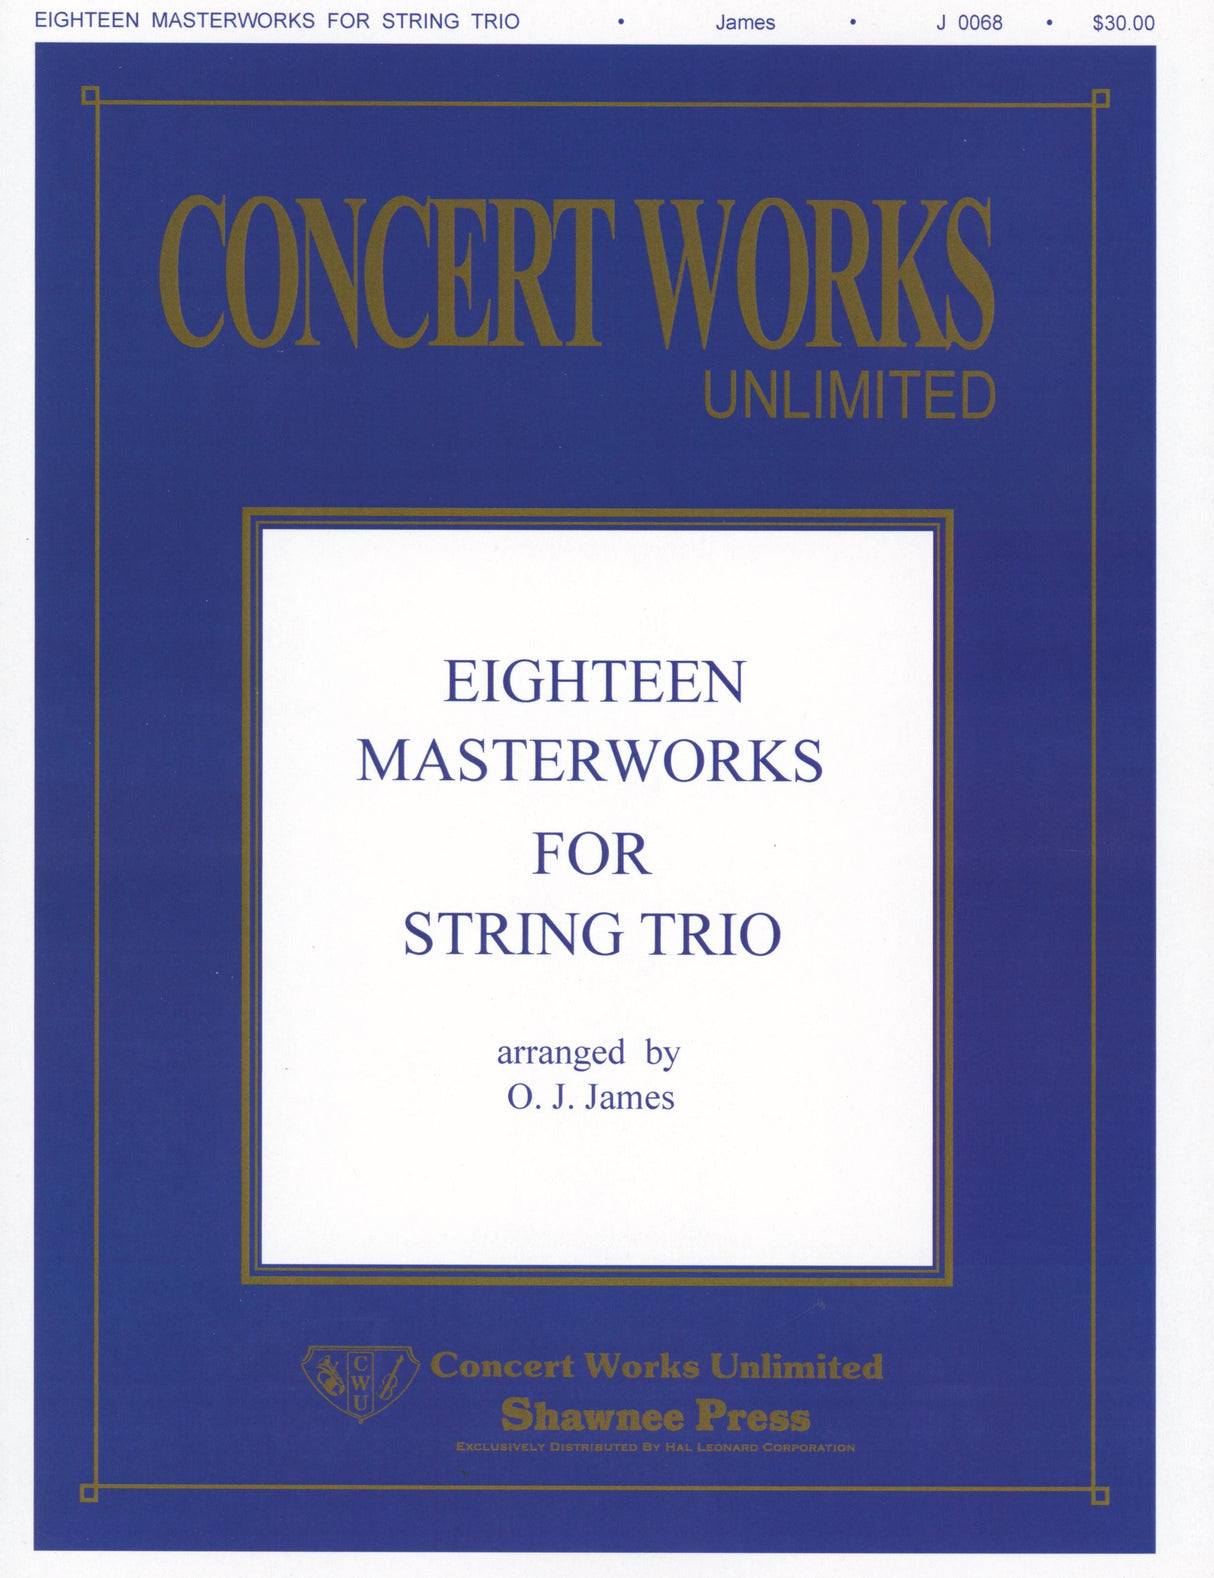 18 Masterworks for String Trio